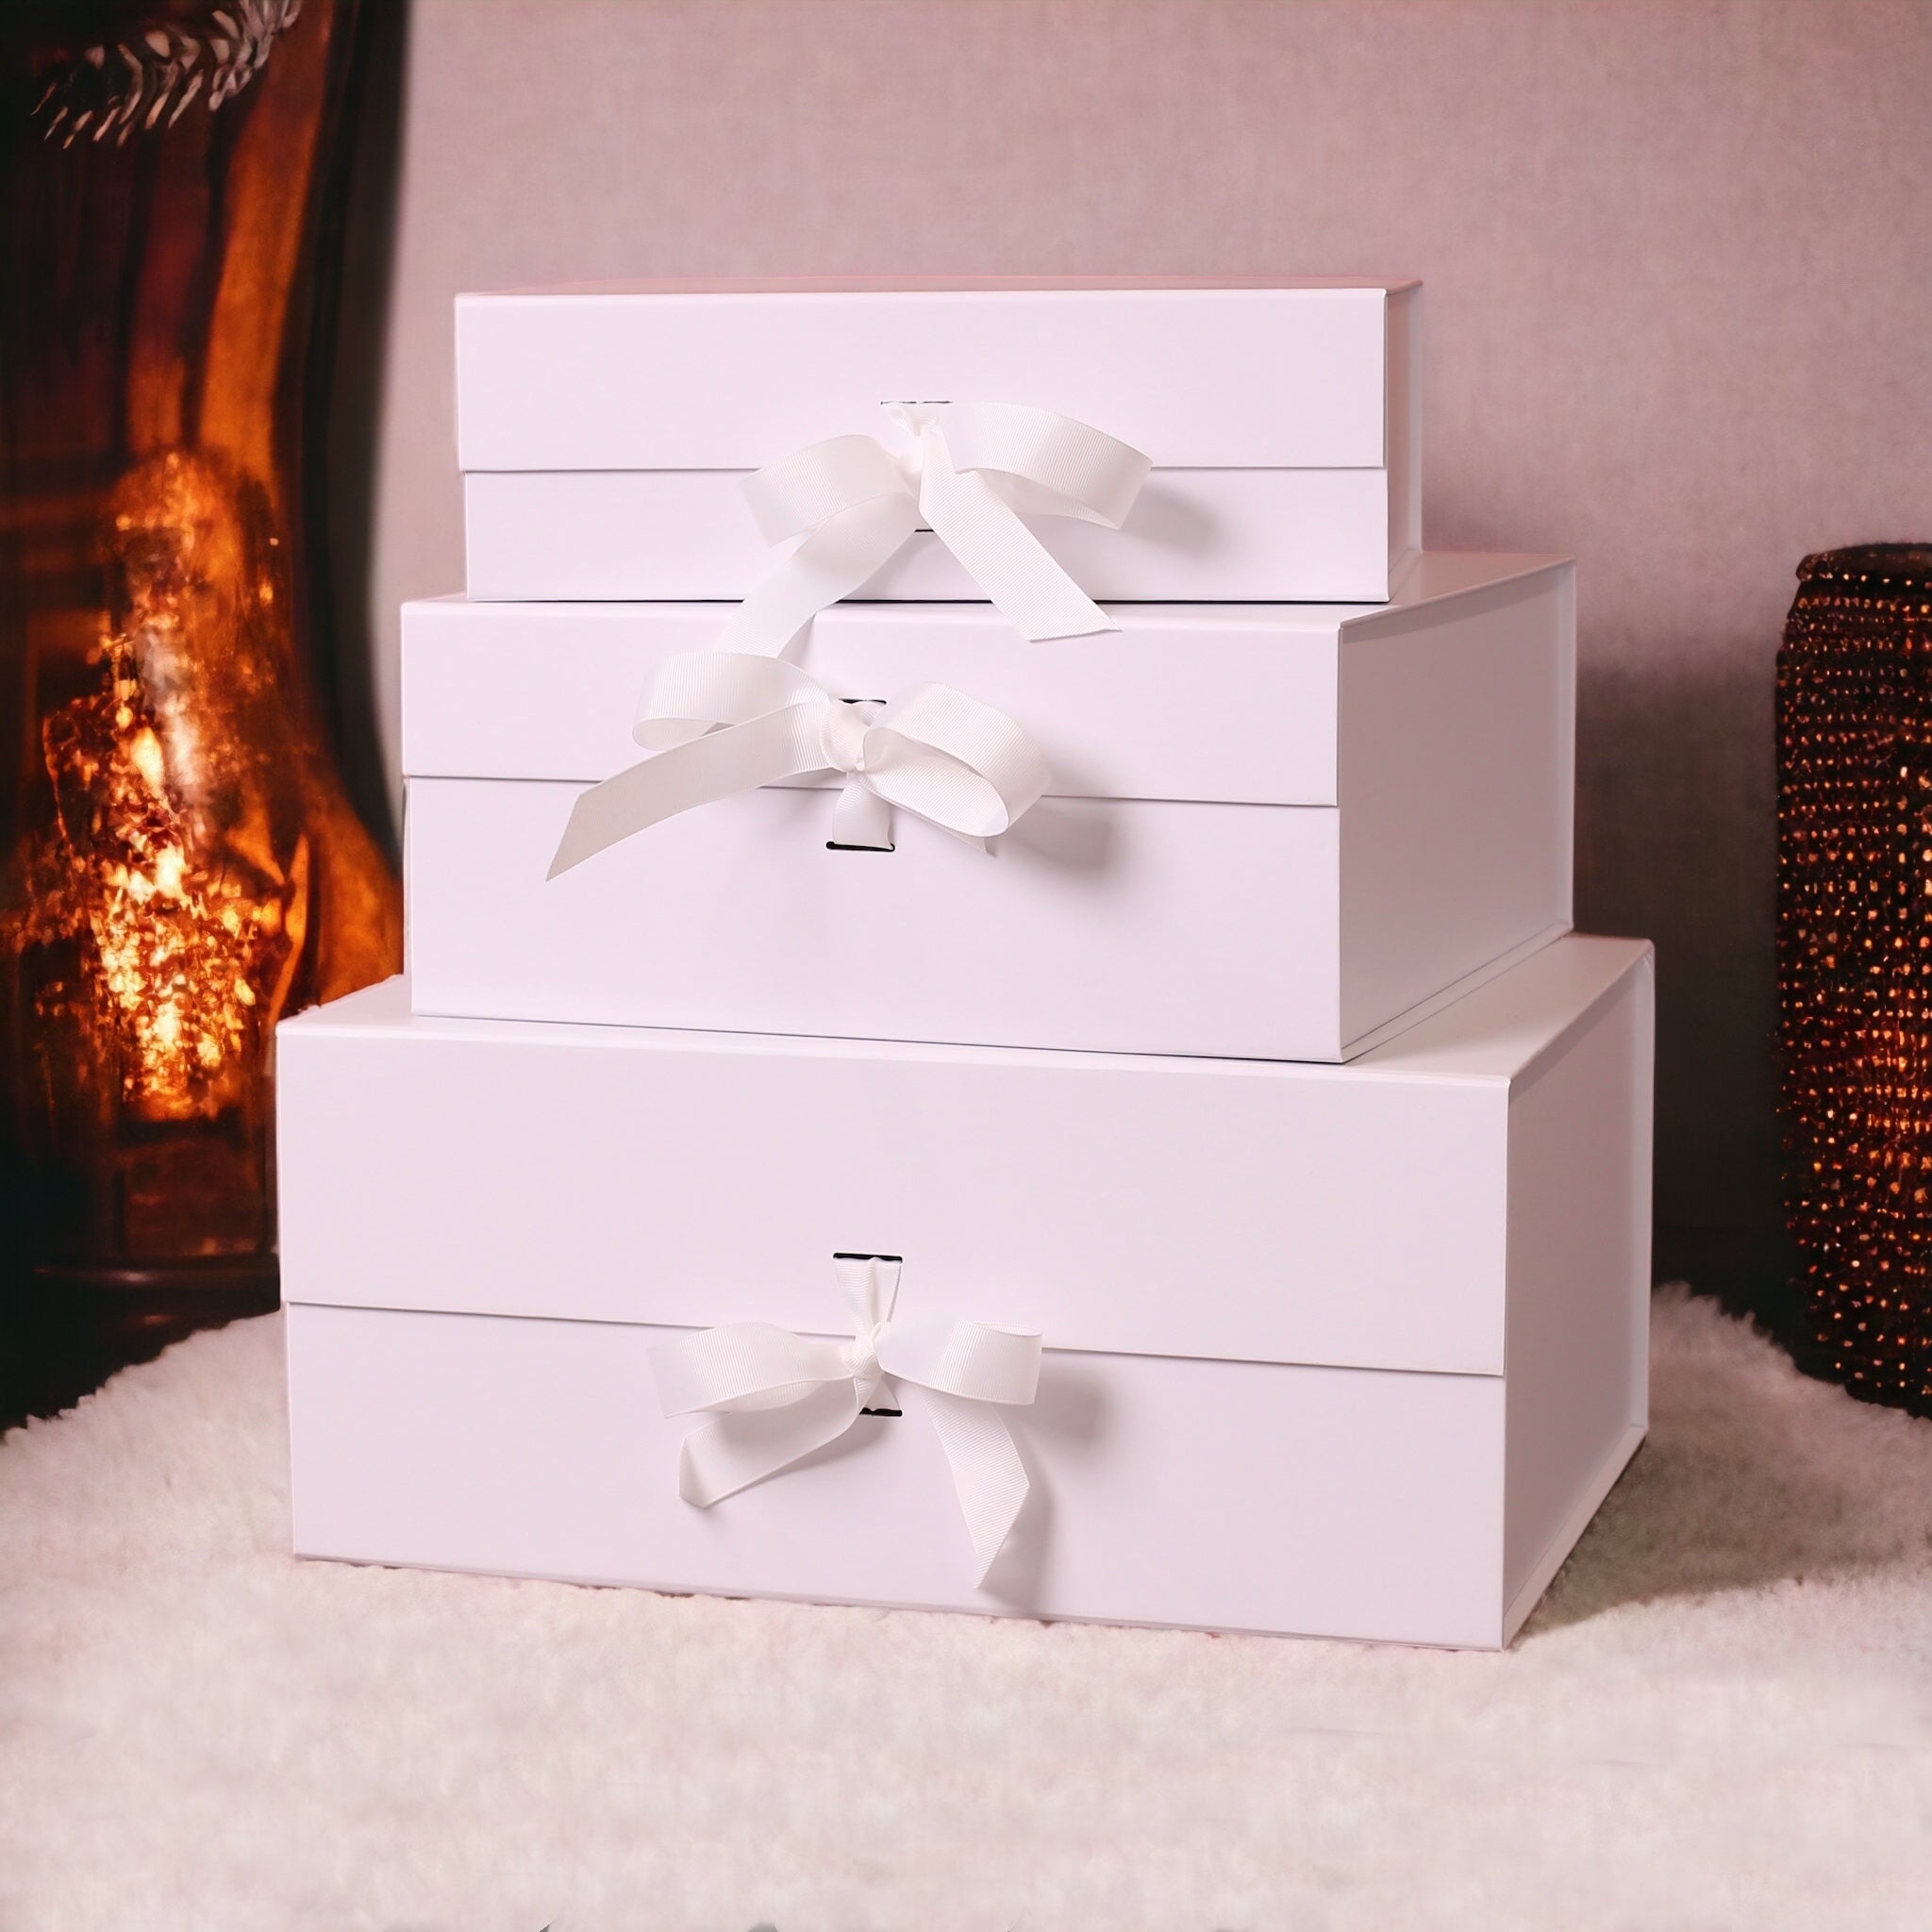 The Sweet Wine Gift Box - Muscat & Chocs!